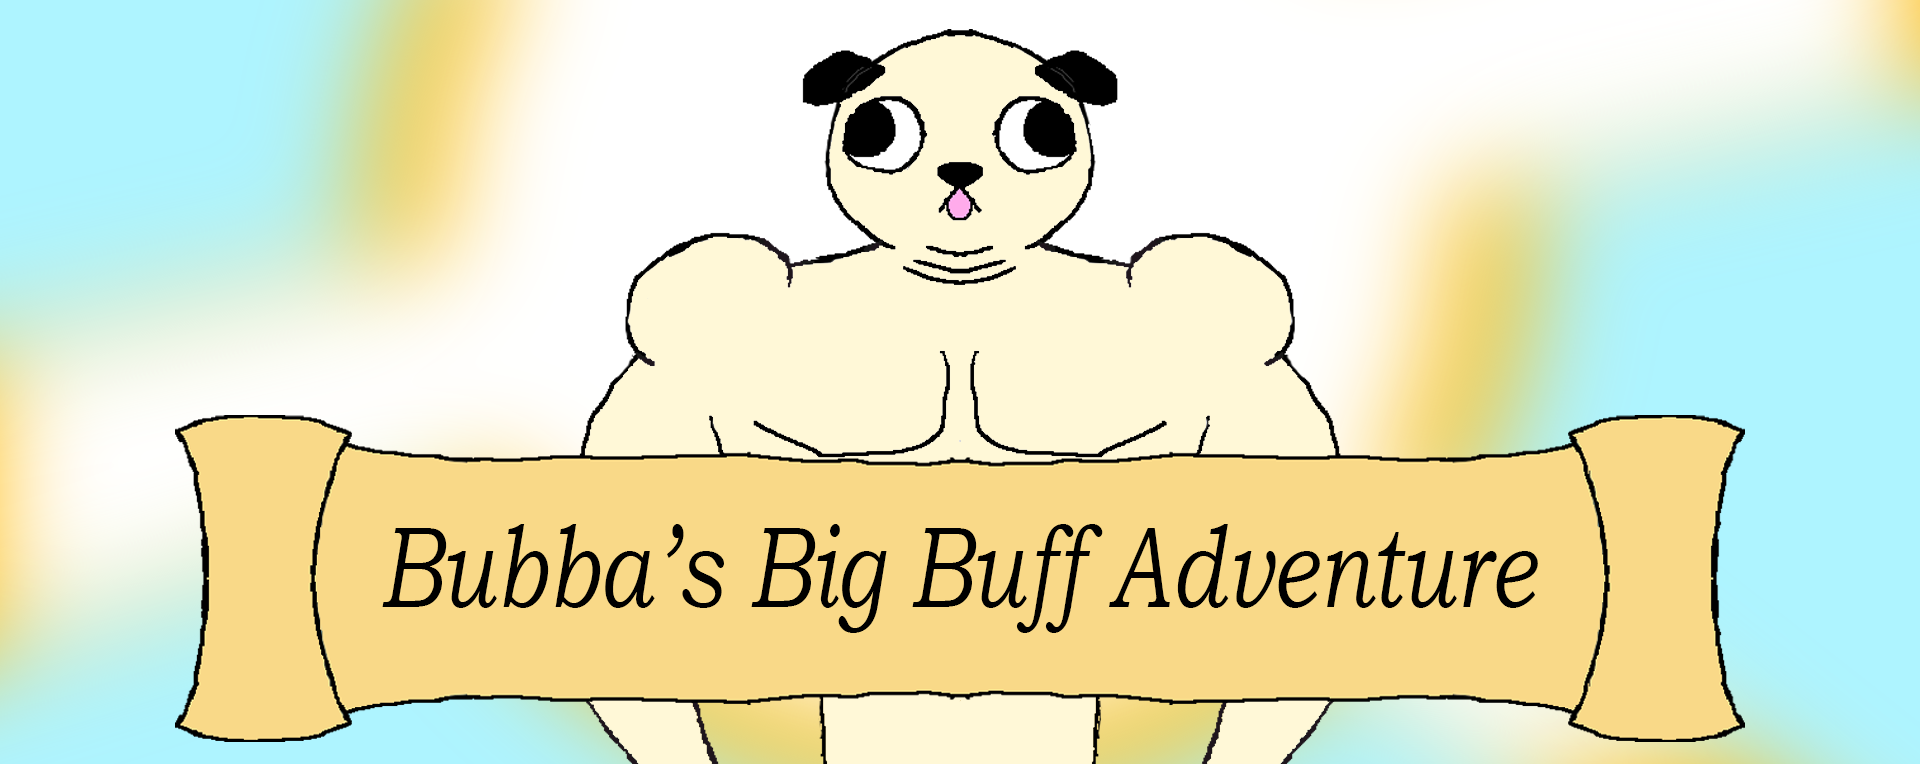 Bubba's Big Buff Adventure